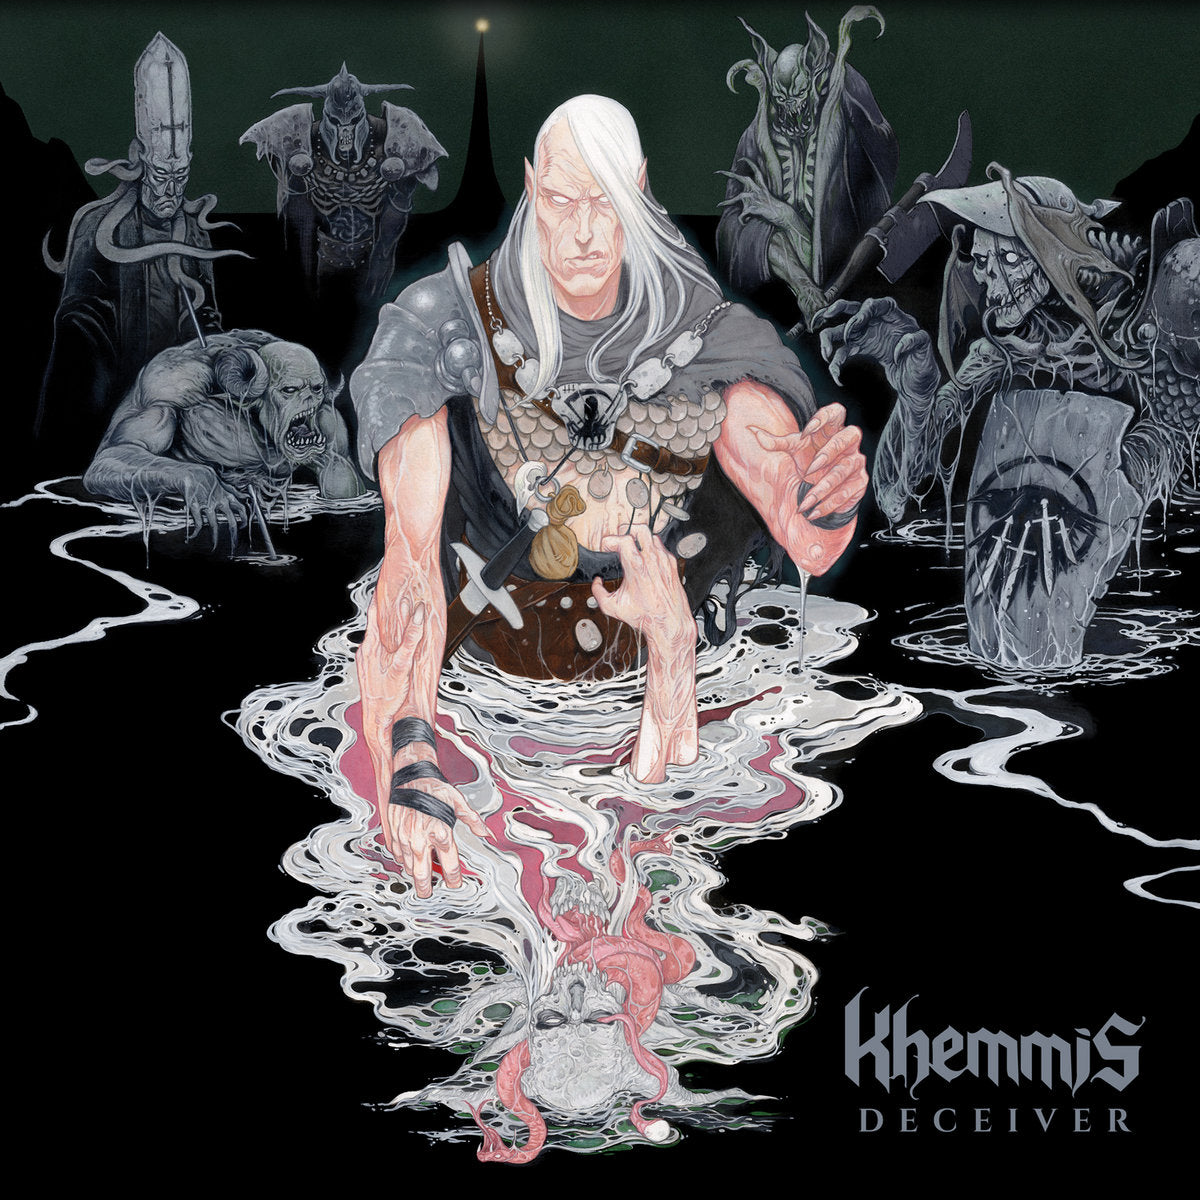 KHEMMIS - DECEIVER Vinyl LP